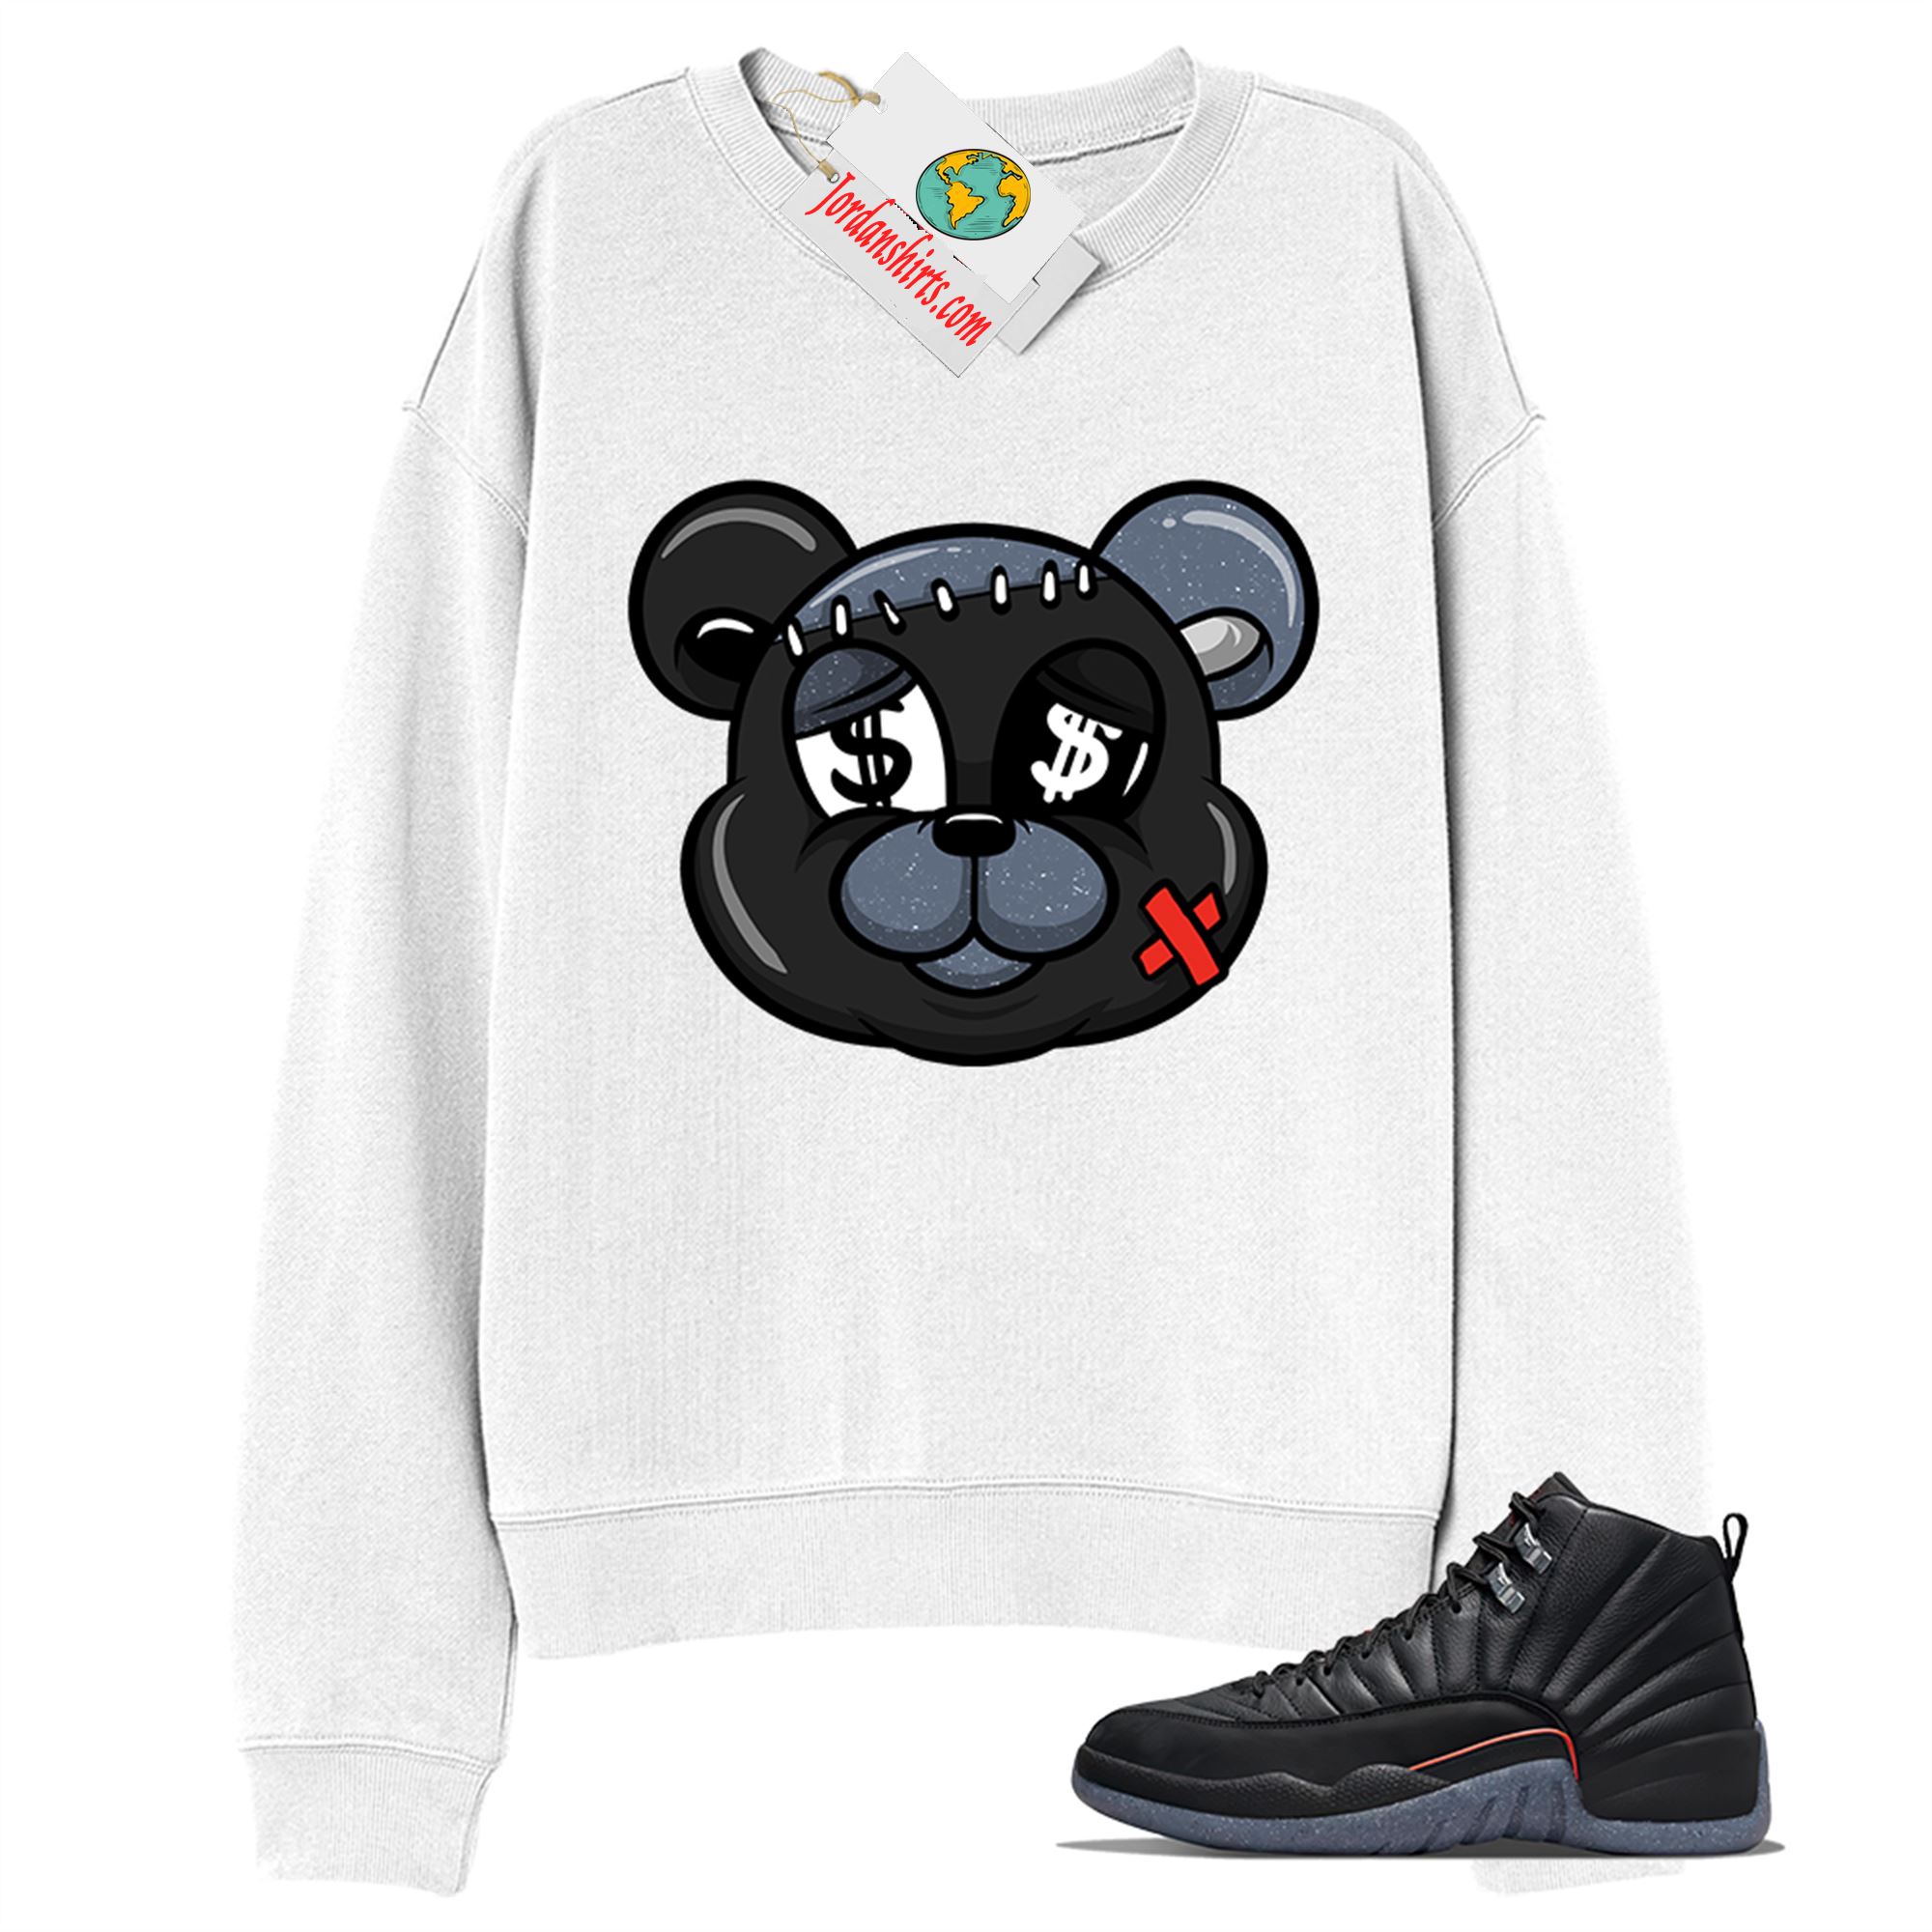 Jordan 12 Sweatshirt, Teddy With Money White Sweatshirt Air Jordan 12 Utility Grind 12s Size Up To 5xl